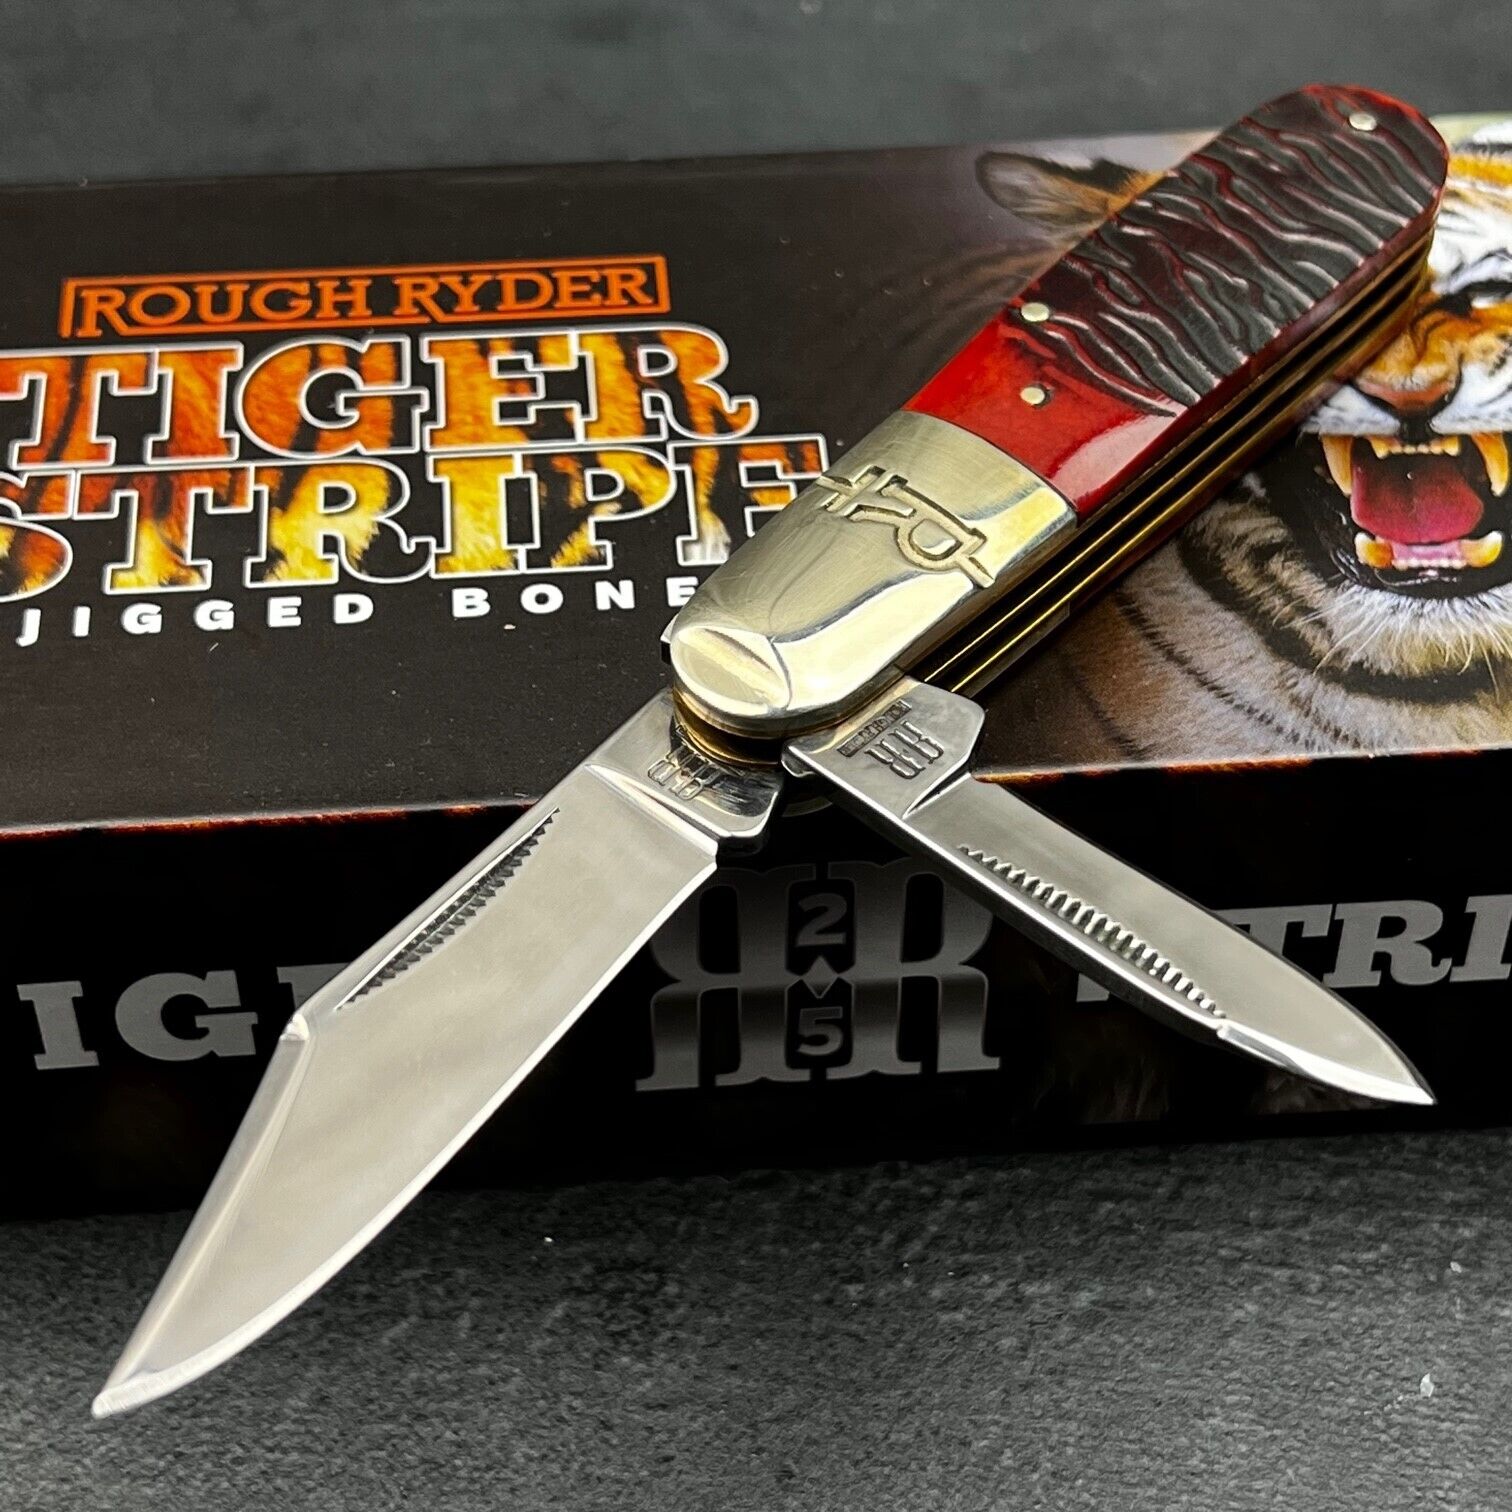 Rough Ryder Tiger Stripped Jigged Bone 2 Blade Barlow Folding Pen Pocket Knife